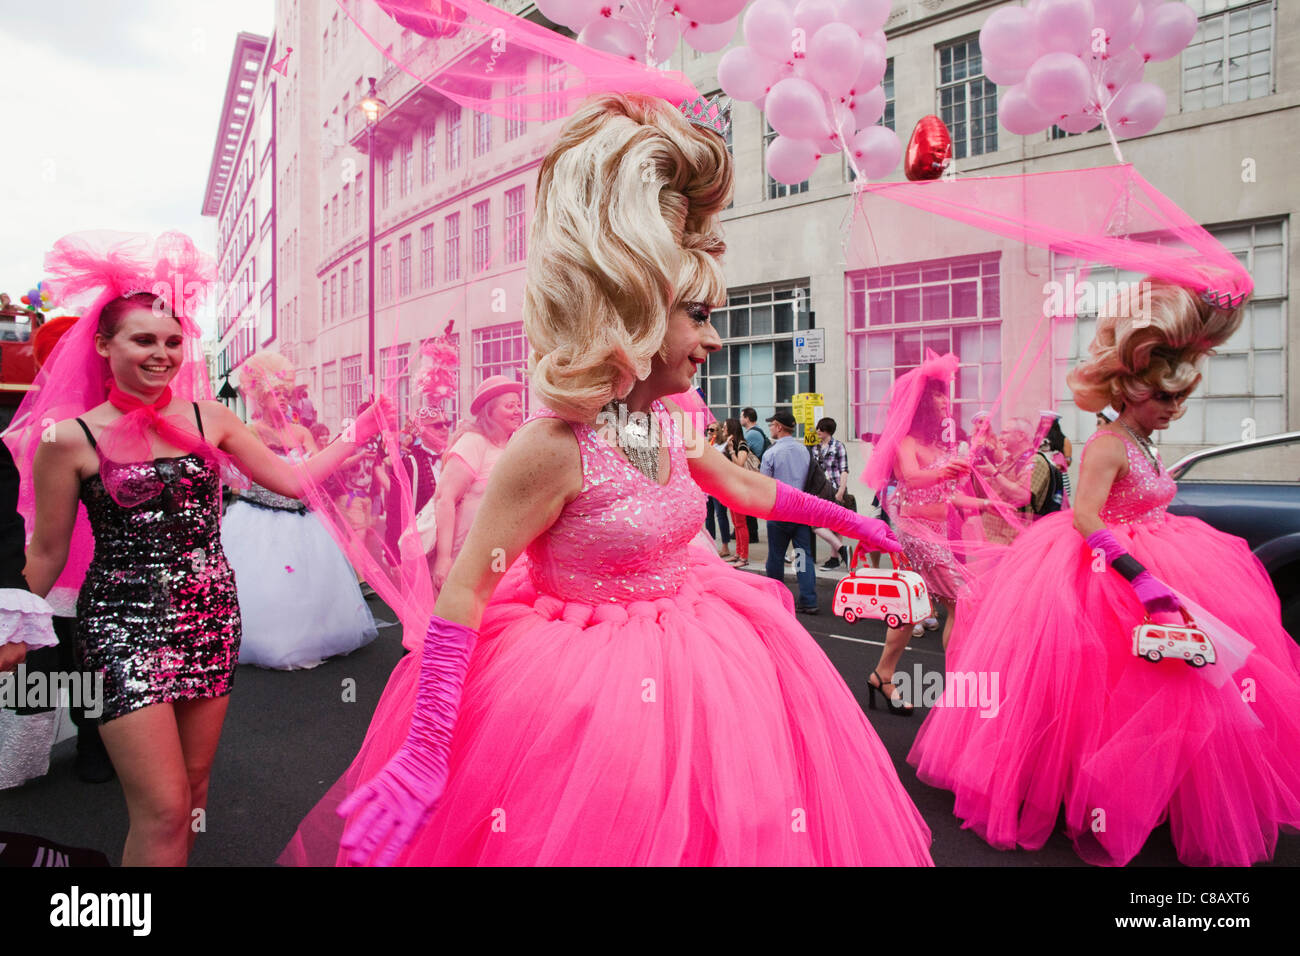 https://c8.alamy.com/comp/C8AXT6/england-london-the-annual-gay-pride-parade-drag-queens-C8AXT6.jpg